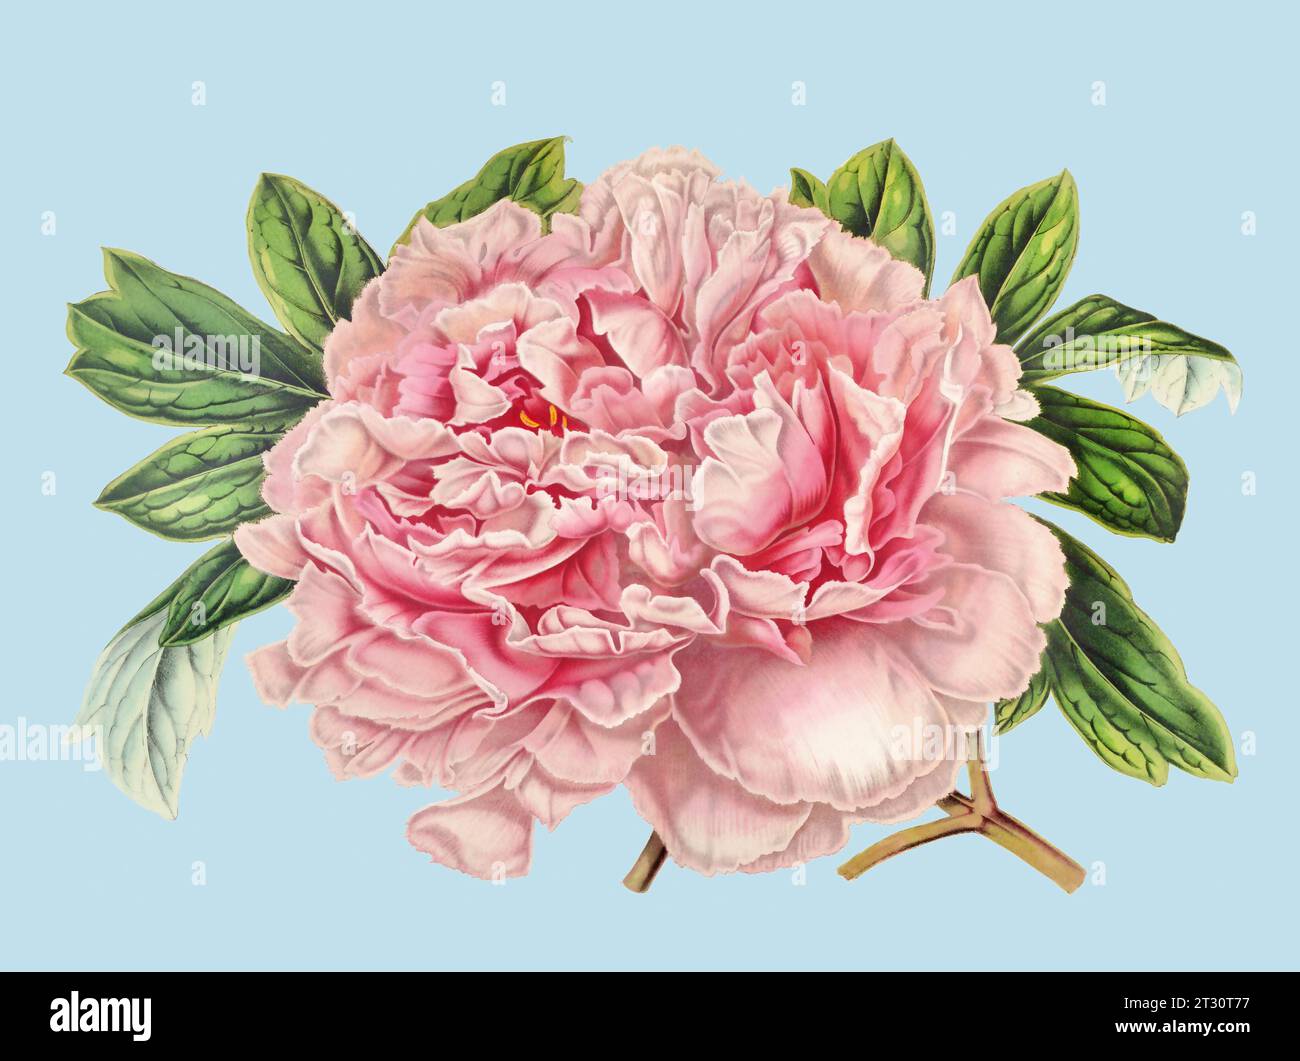 Colorful Peony Flower Illustration: A digital vintage-style flower on a plain light blue background. Stock Photo